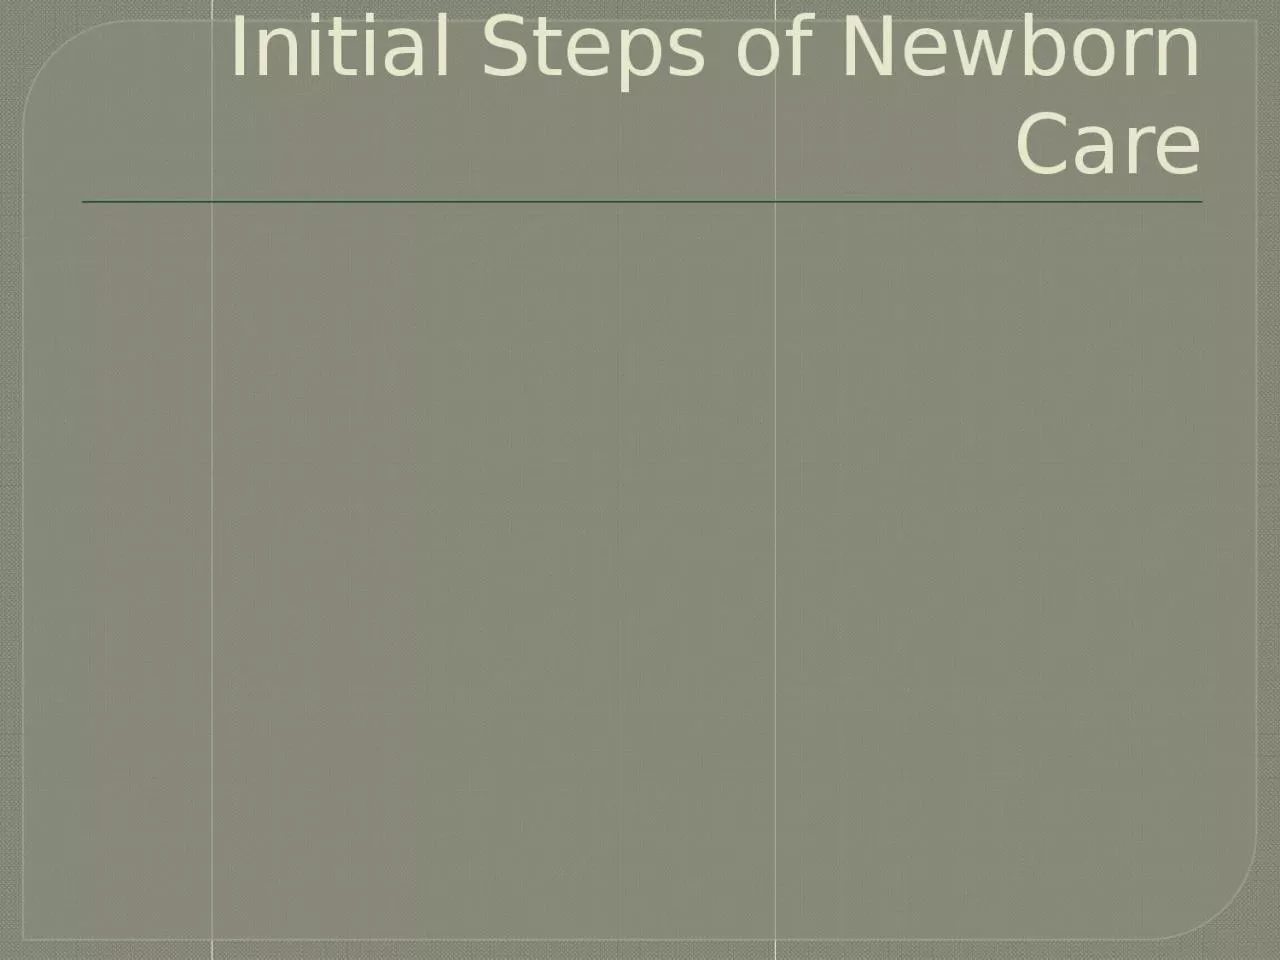 Initial Steps of Newborn Care